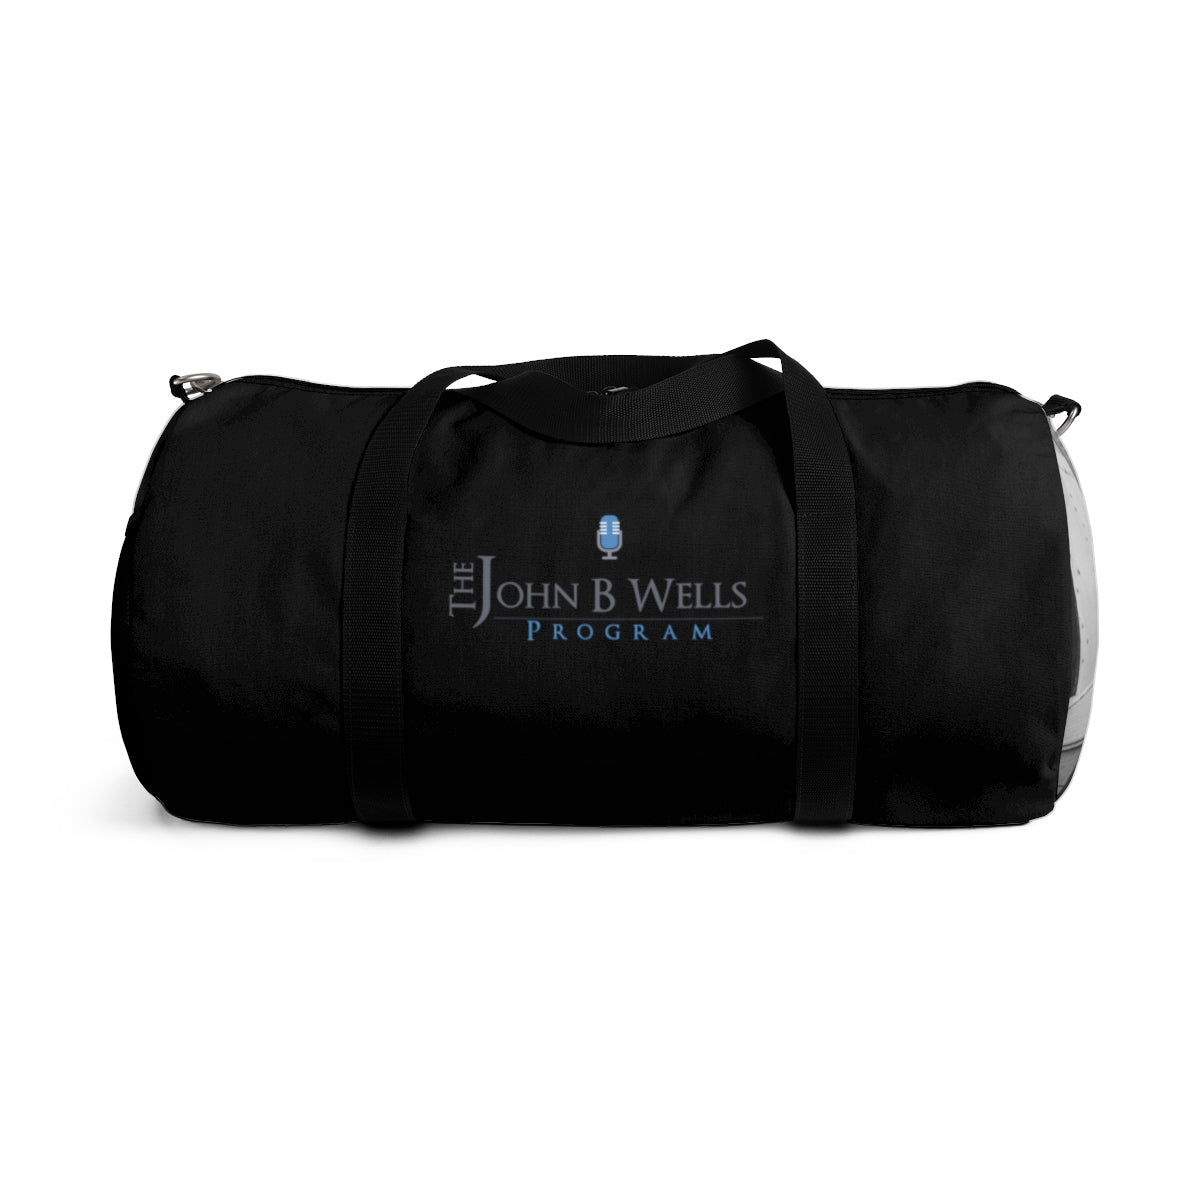 John B Wells Duffle Bag